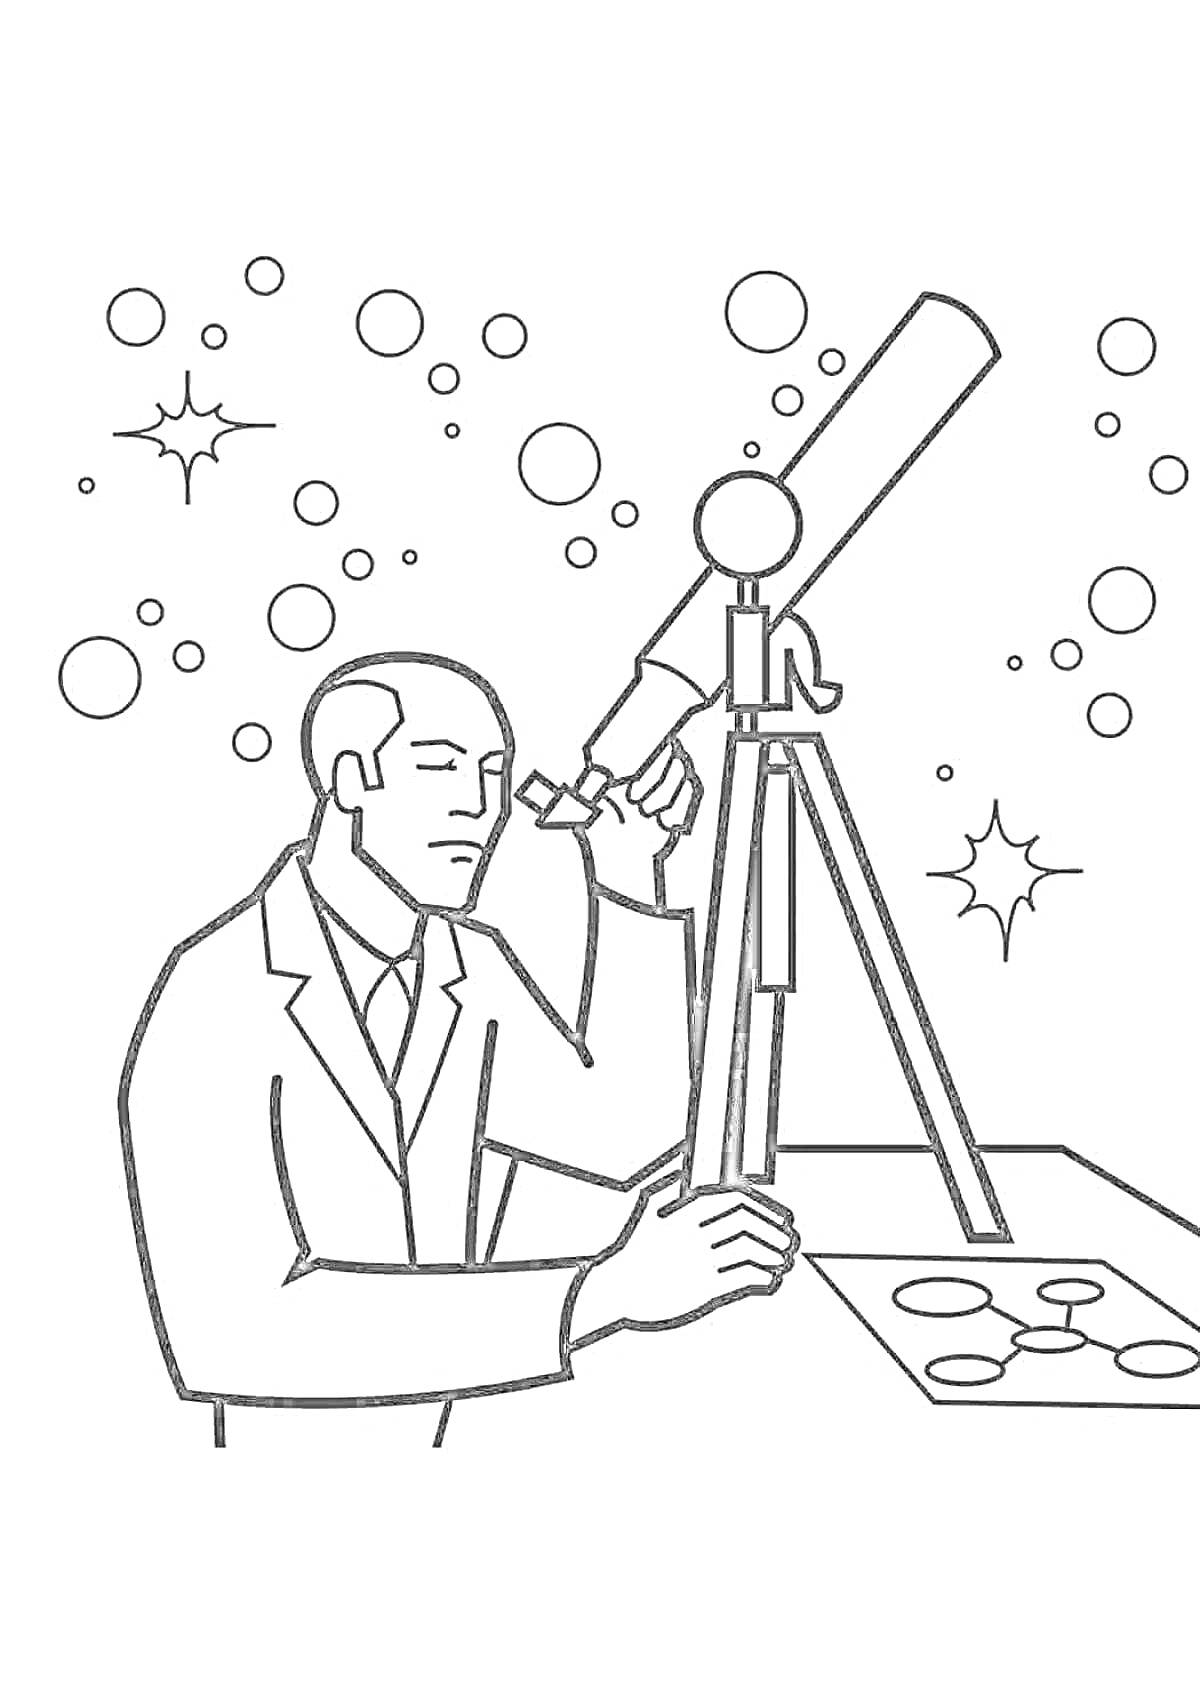 Раскраска Человек наблюдает через телескоп, стоящий на штативе, звезды и планеты на фоне, стол с бумагами и карандашами